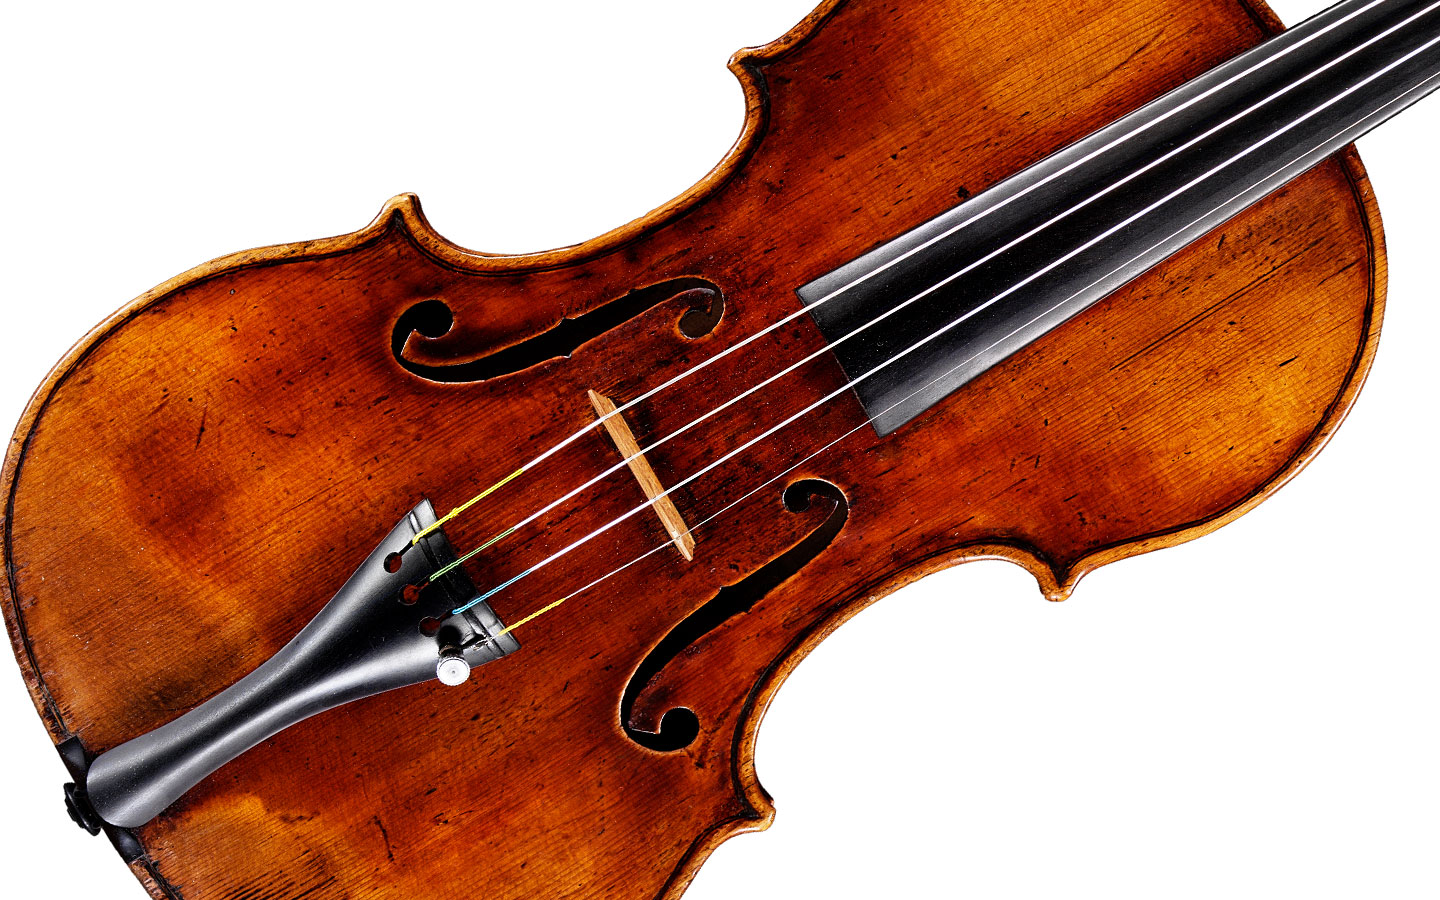 The 1743 Guarneri Violin